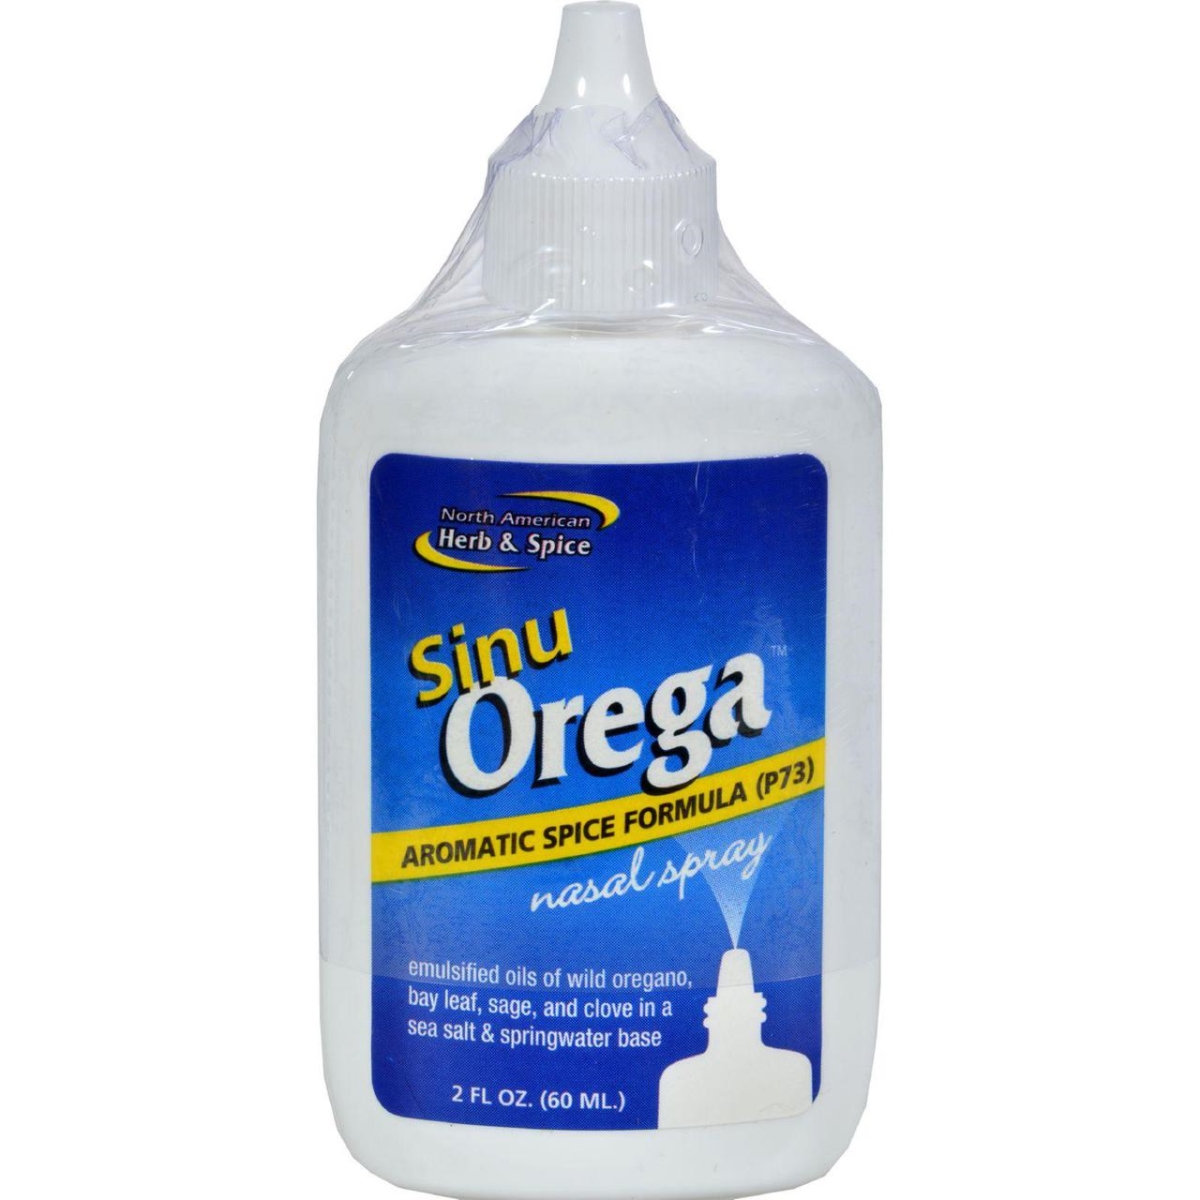 Hg0175430 2 Fl Oz Sinu-orega Nasal Spray